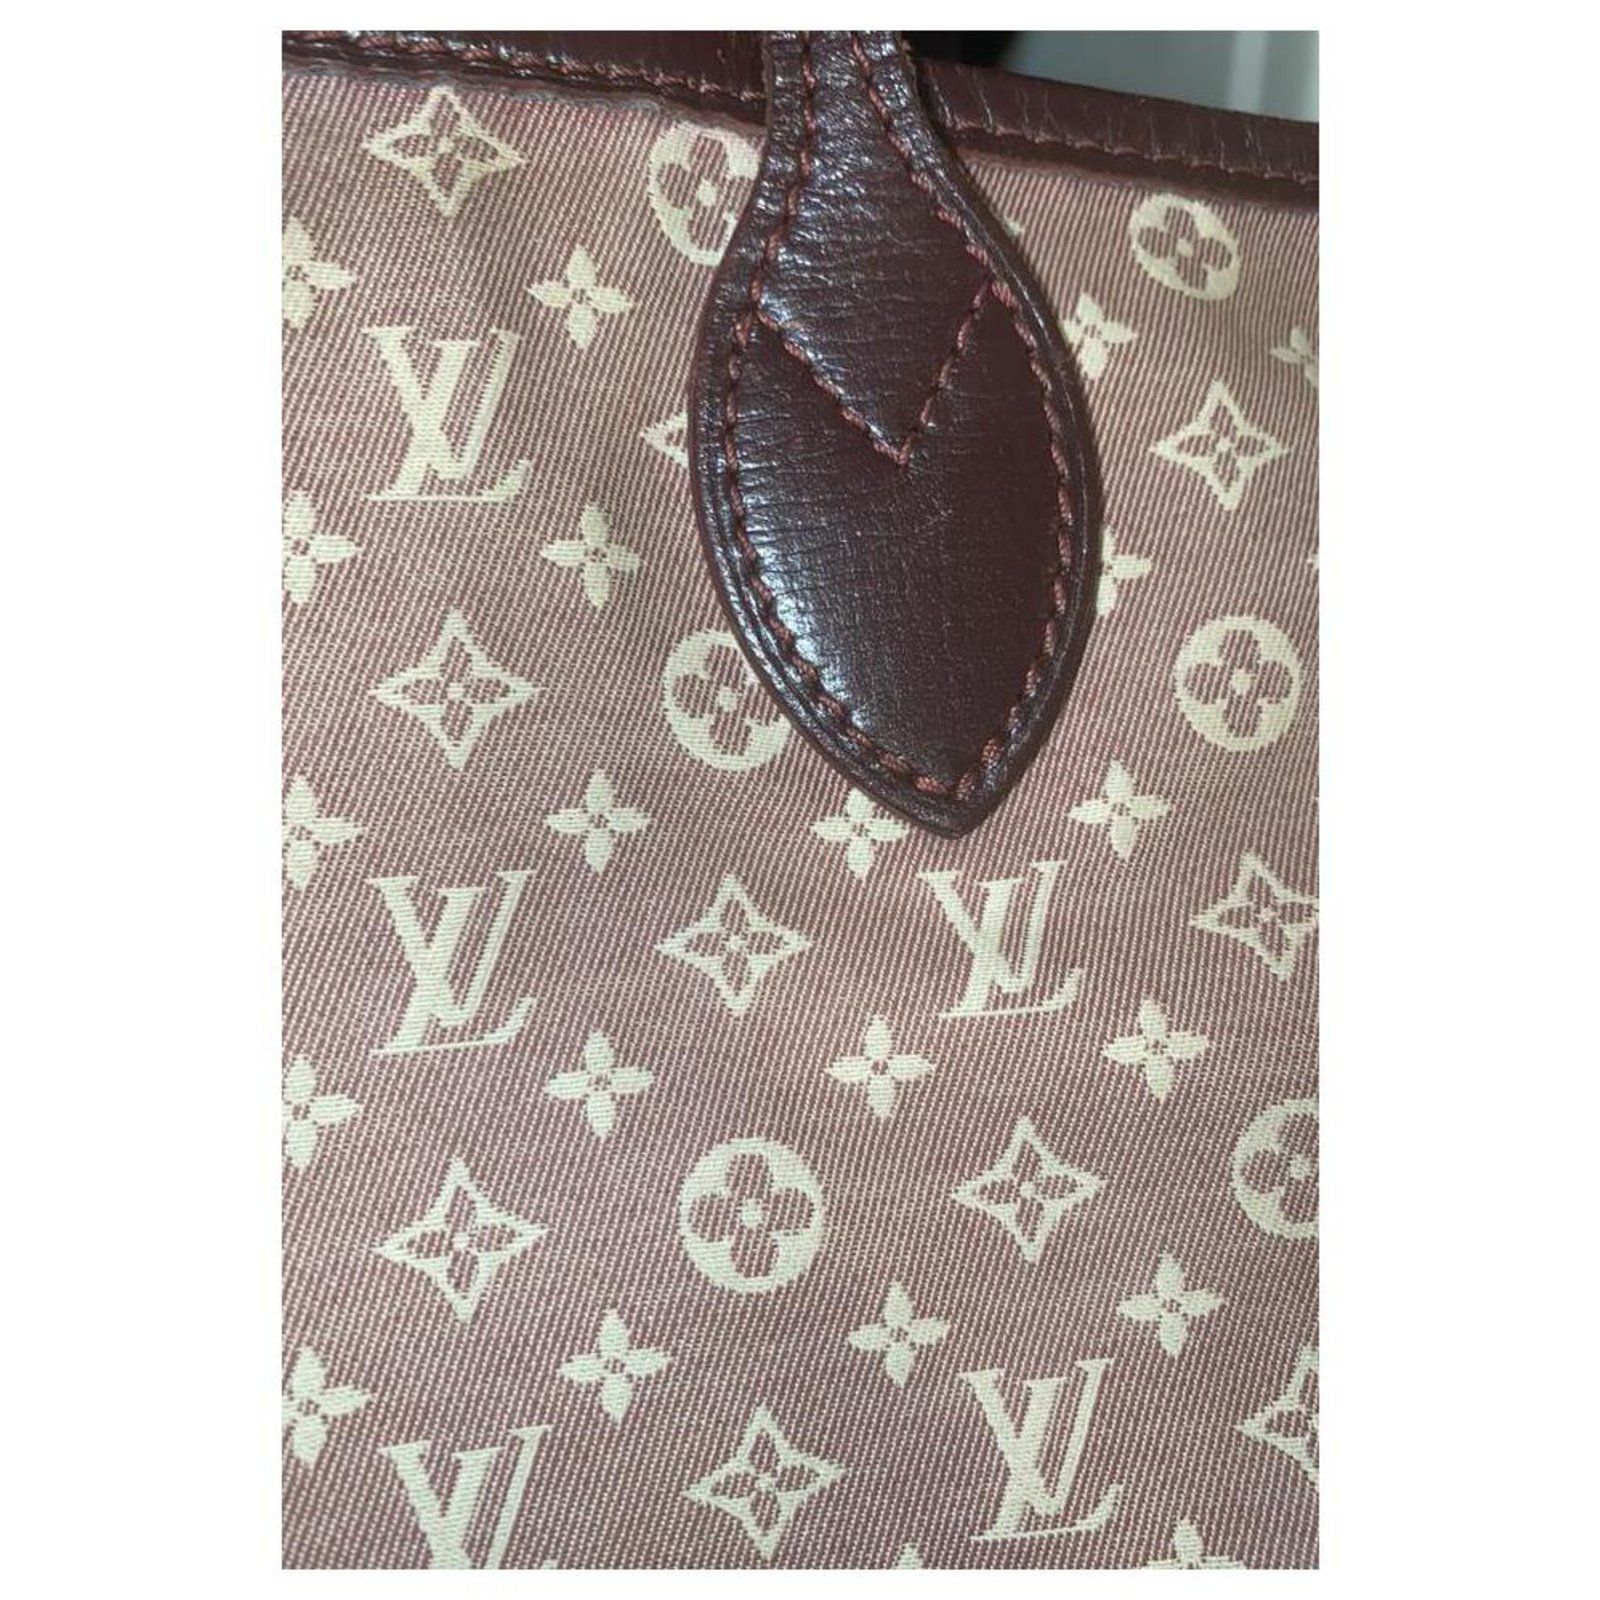 Louis Vuitton Sepia Mini Lin Idylle Bordeaux Neverfull MM Tote Bag 863262